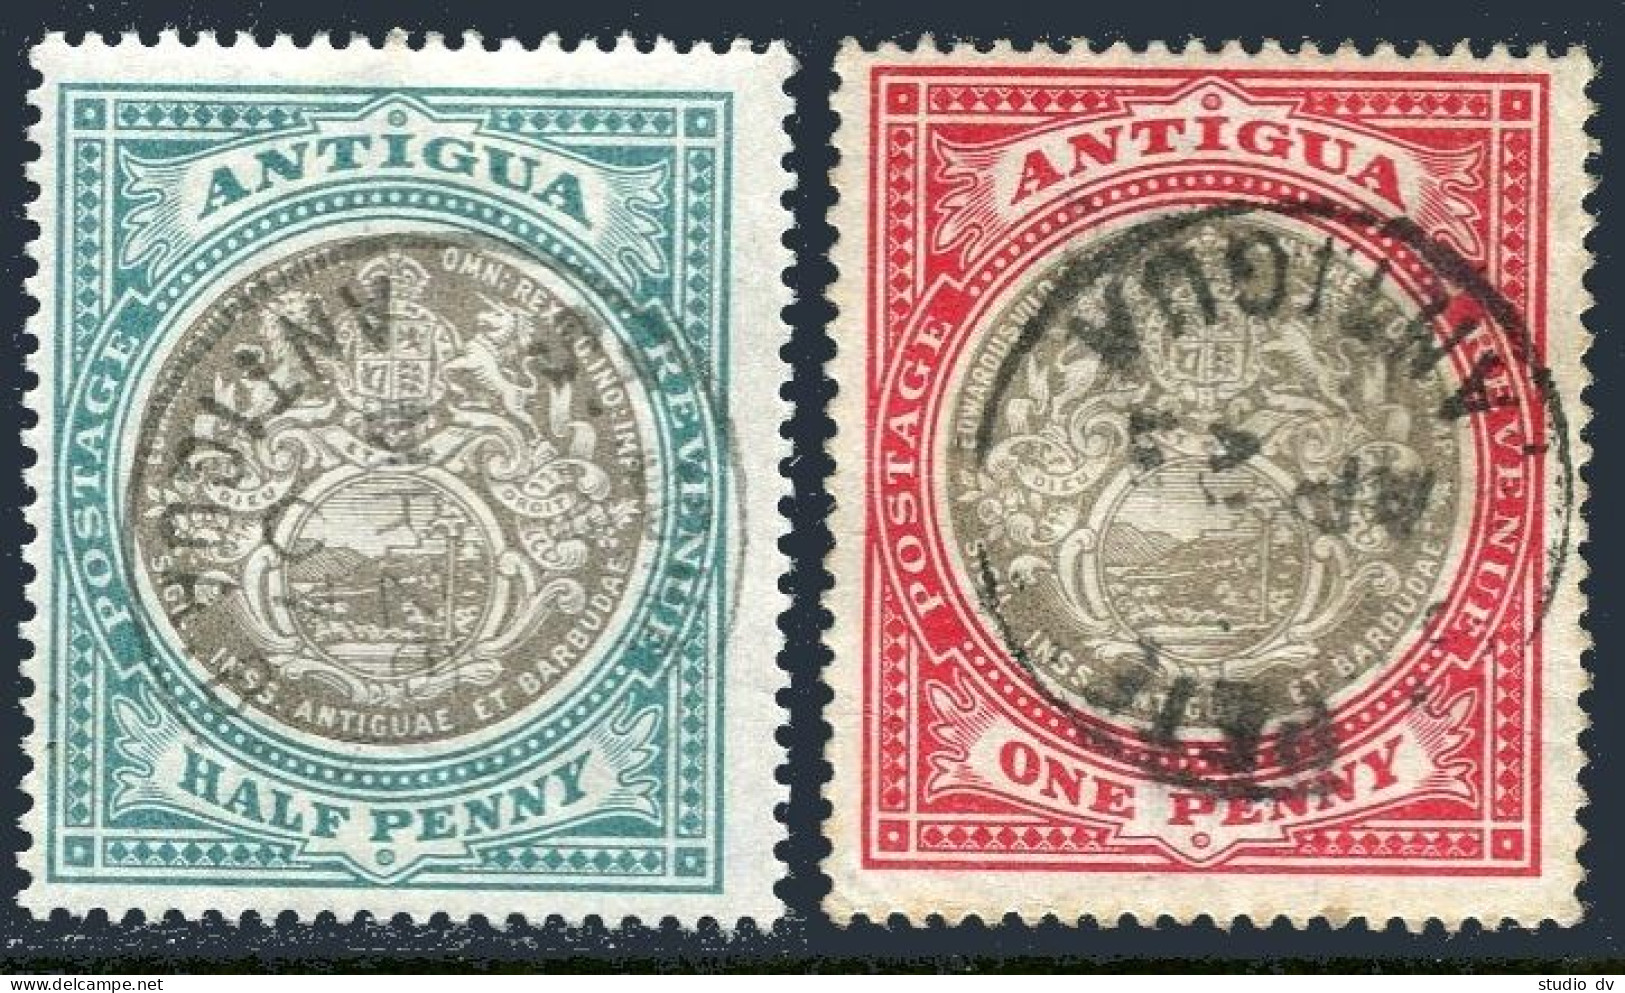 Antigua 21-22, Used. Michel 21-22. Seal Of The Colony, 1903. - Antigua Et Barbuda (1981-...)